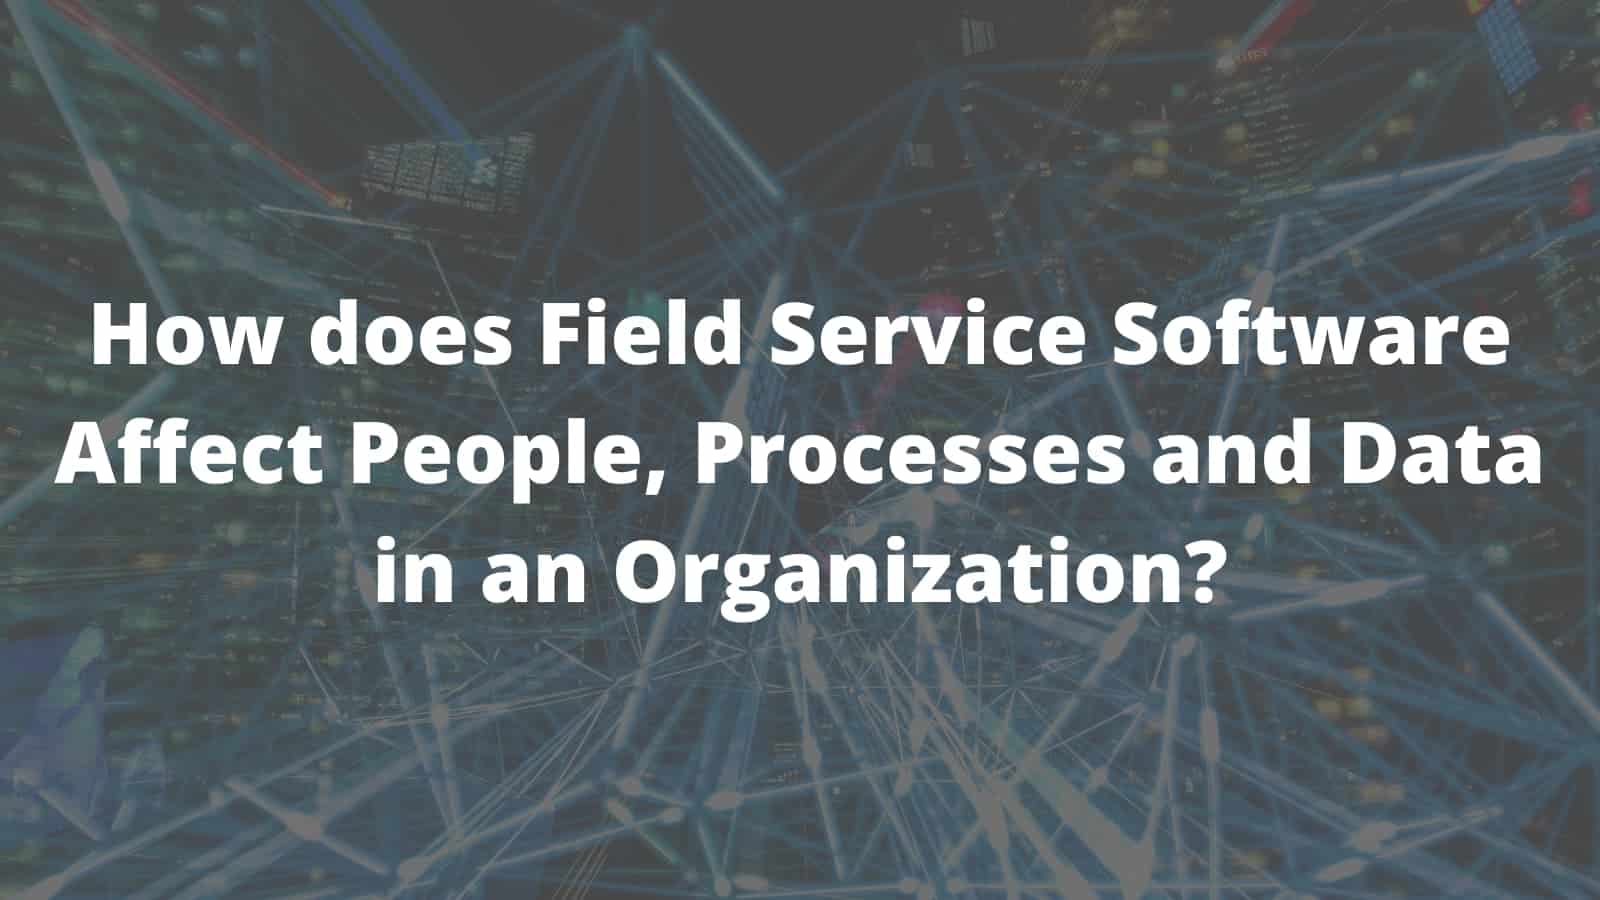 Field Service Software